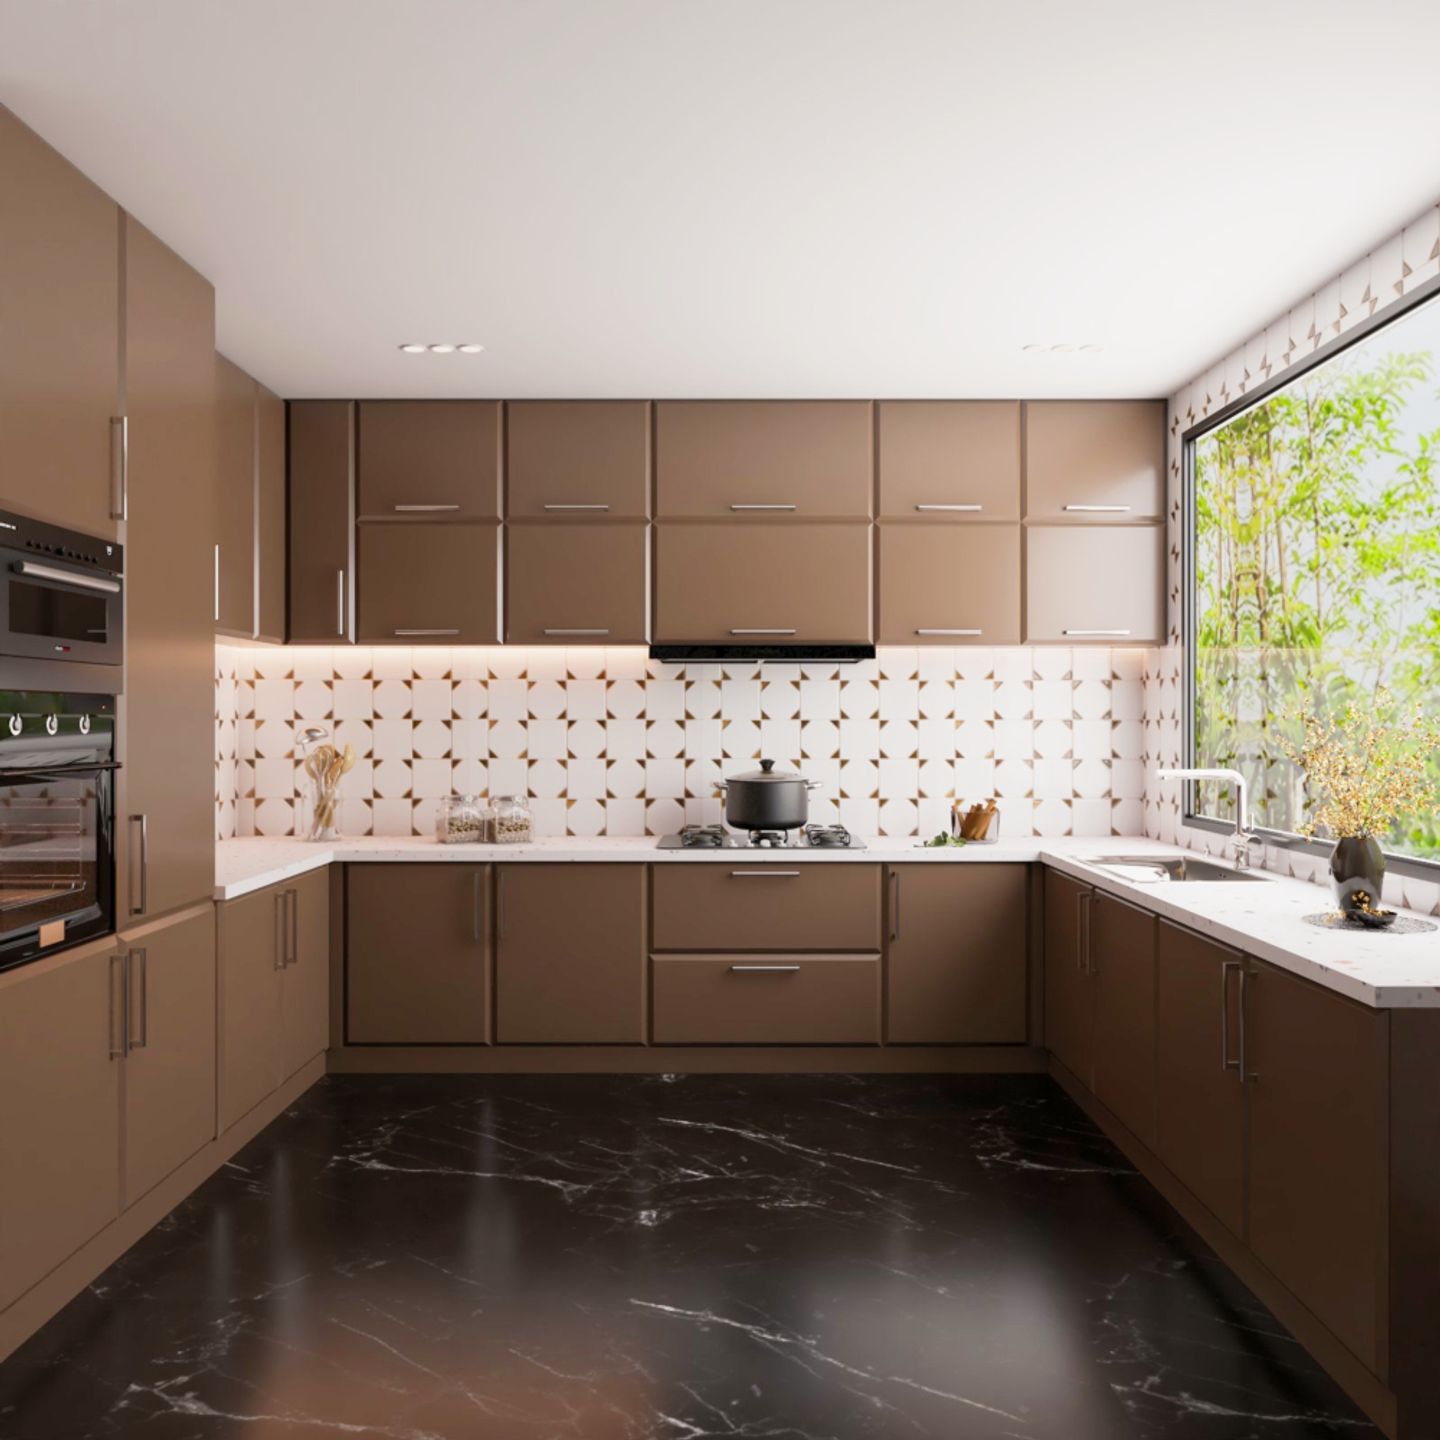 Brown Indian Kitchen Design With Geometric White Backsplash And Granite Flooring - Livspace